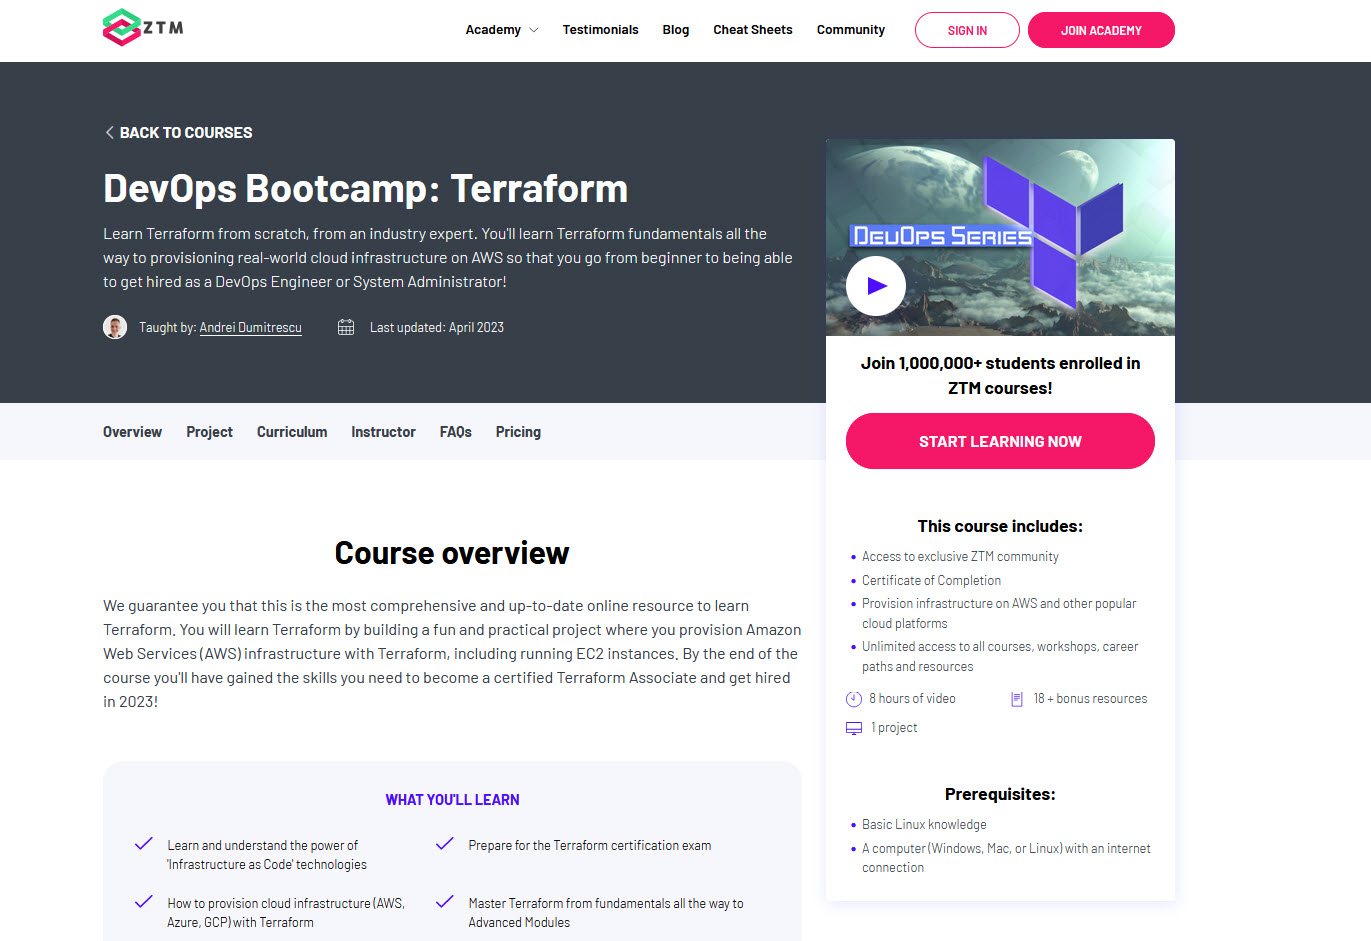 devops bootcamp for terraform